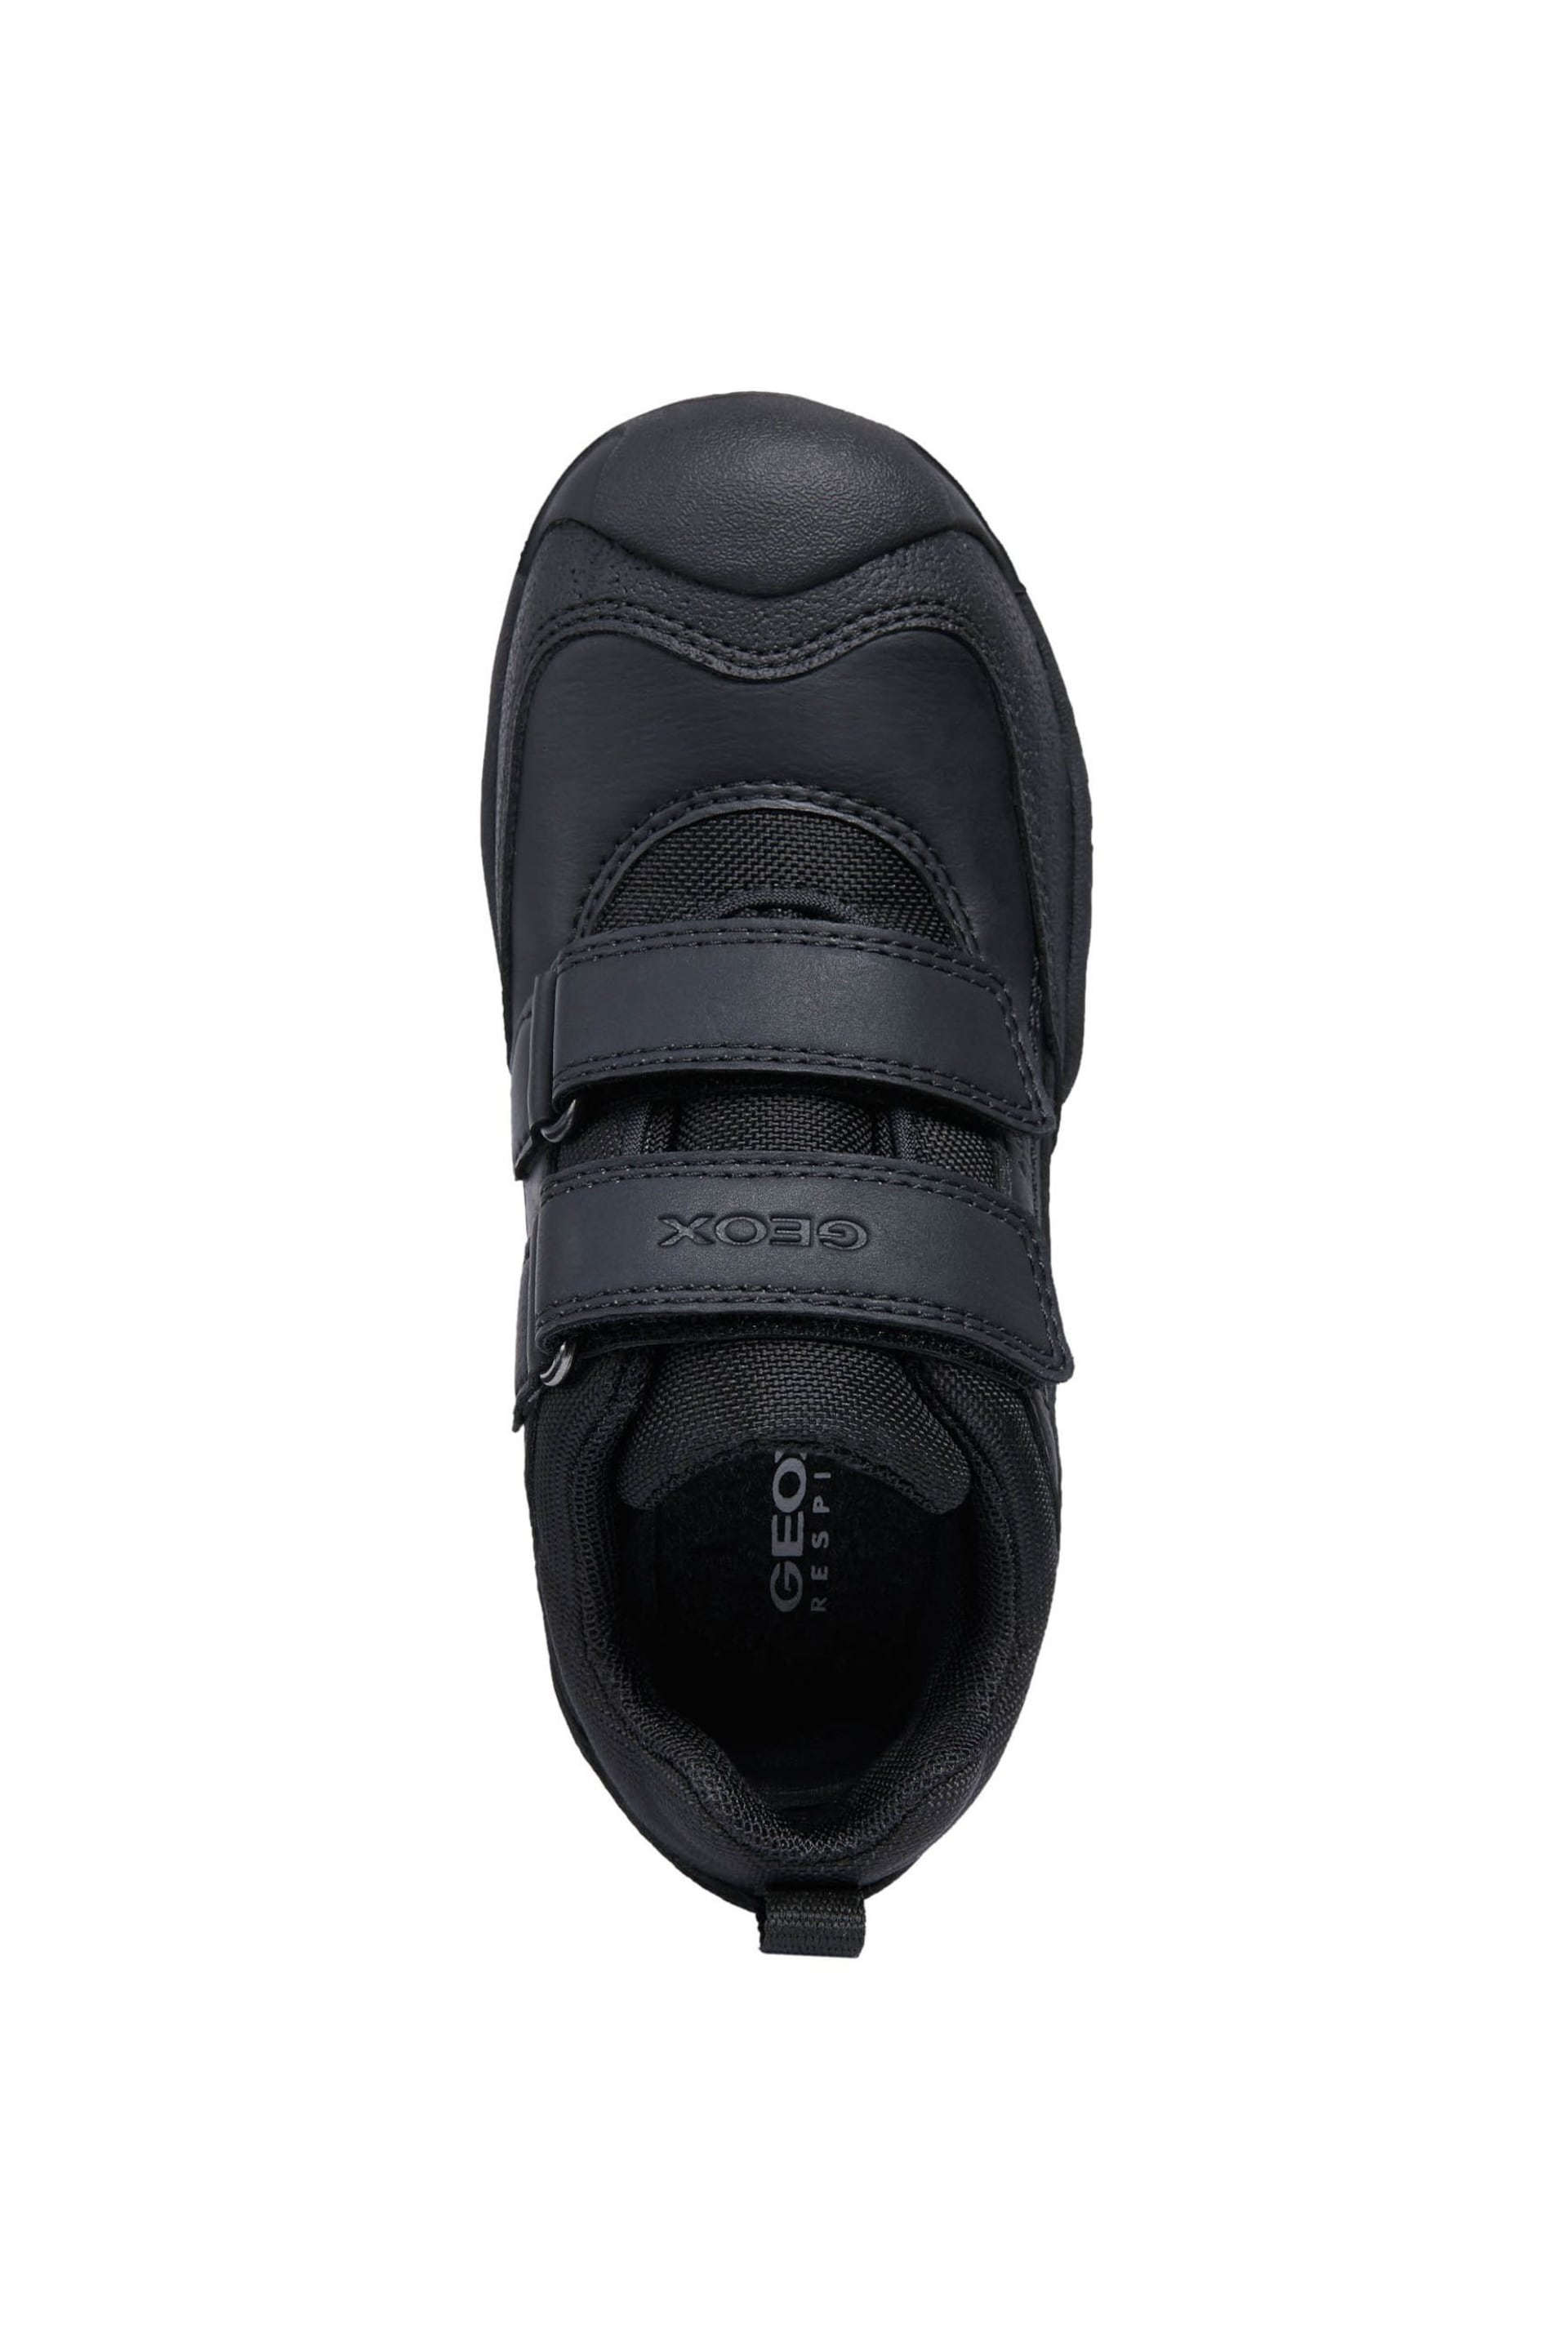 Geox Junior Black New Savage Boy B A Shoes - Image 4 of 5